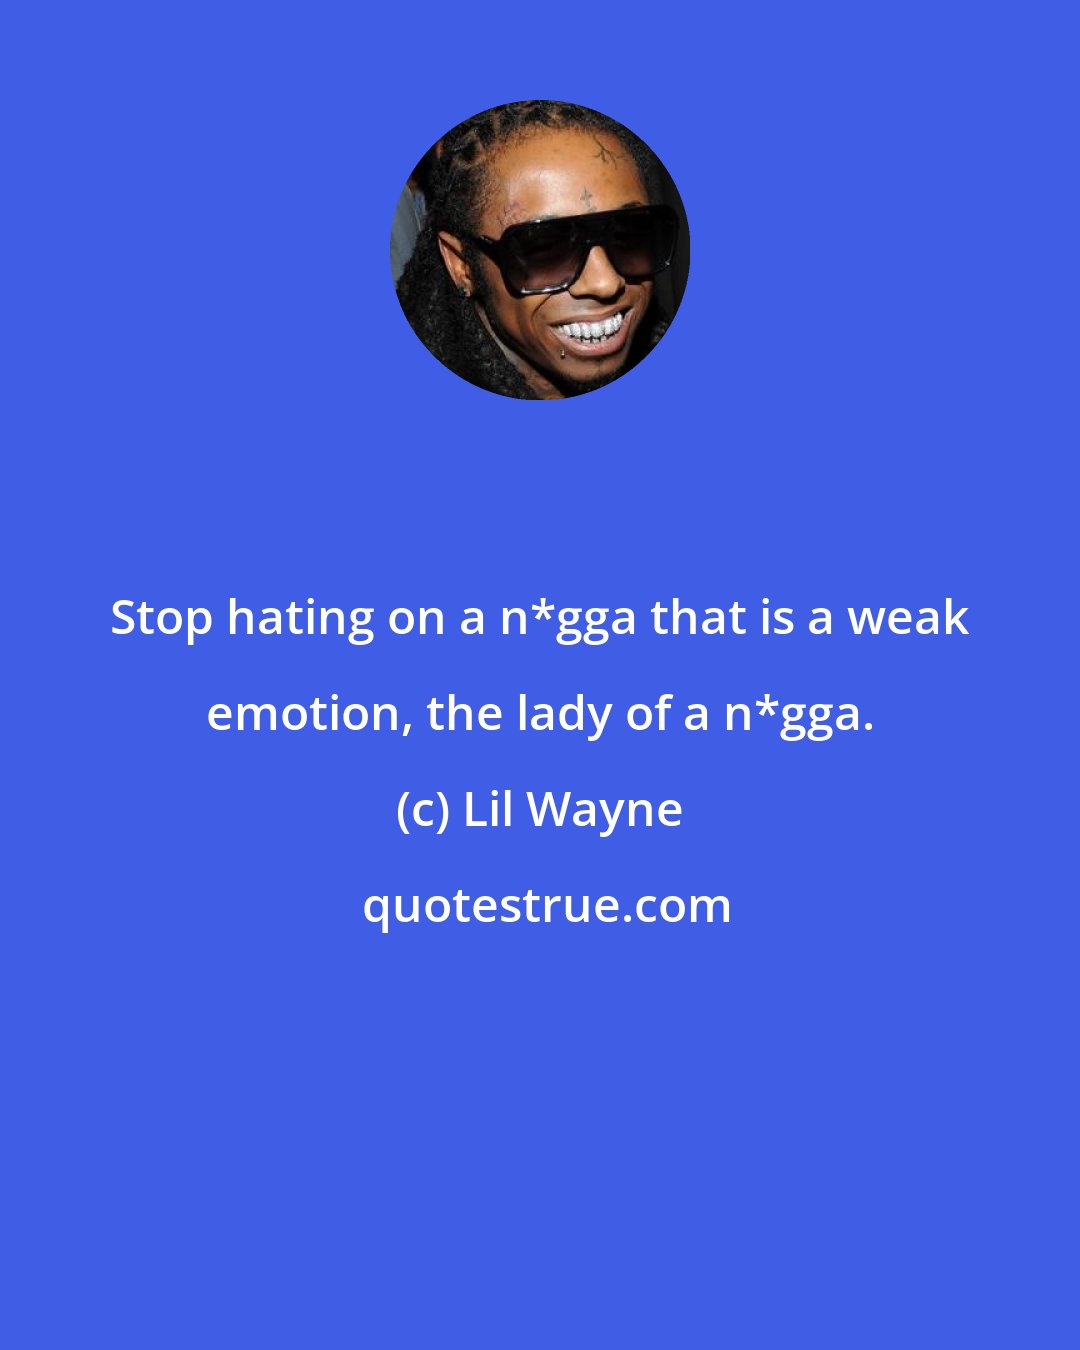 Lil Wayne: Stop hating on a n*gga that is a weak emotion, the lady of a n*gga.